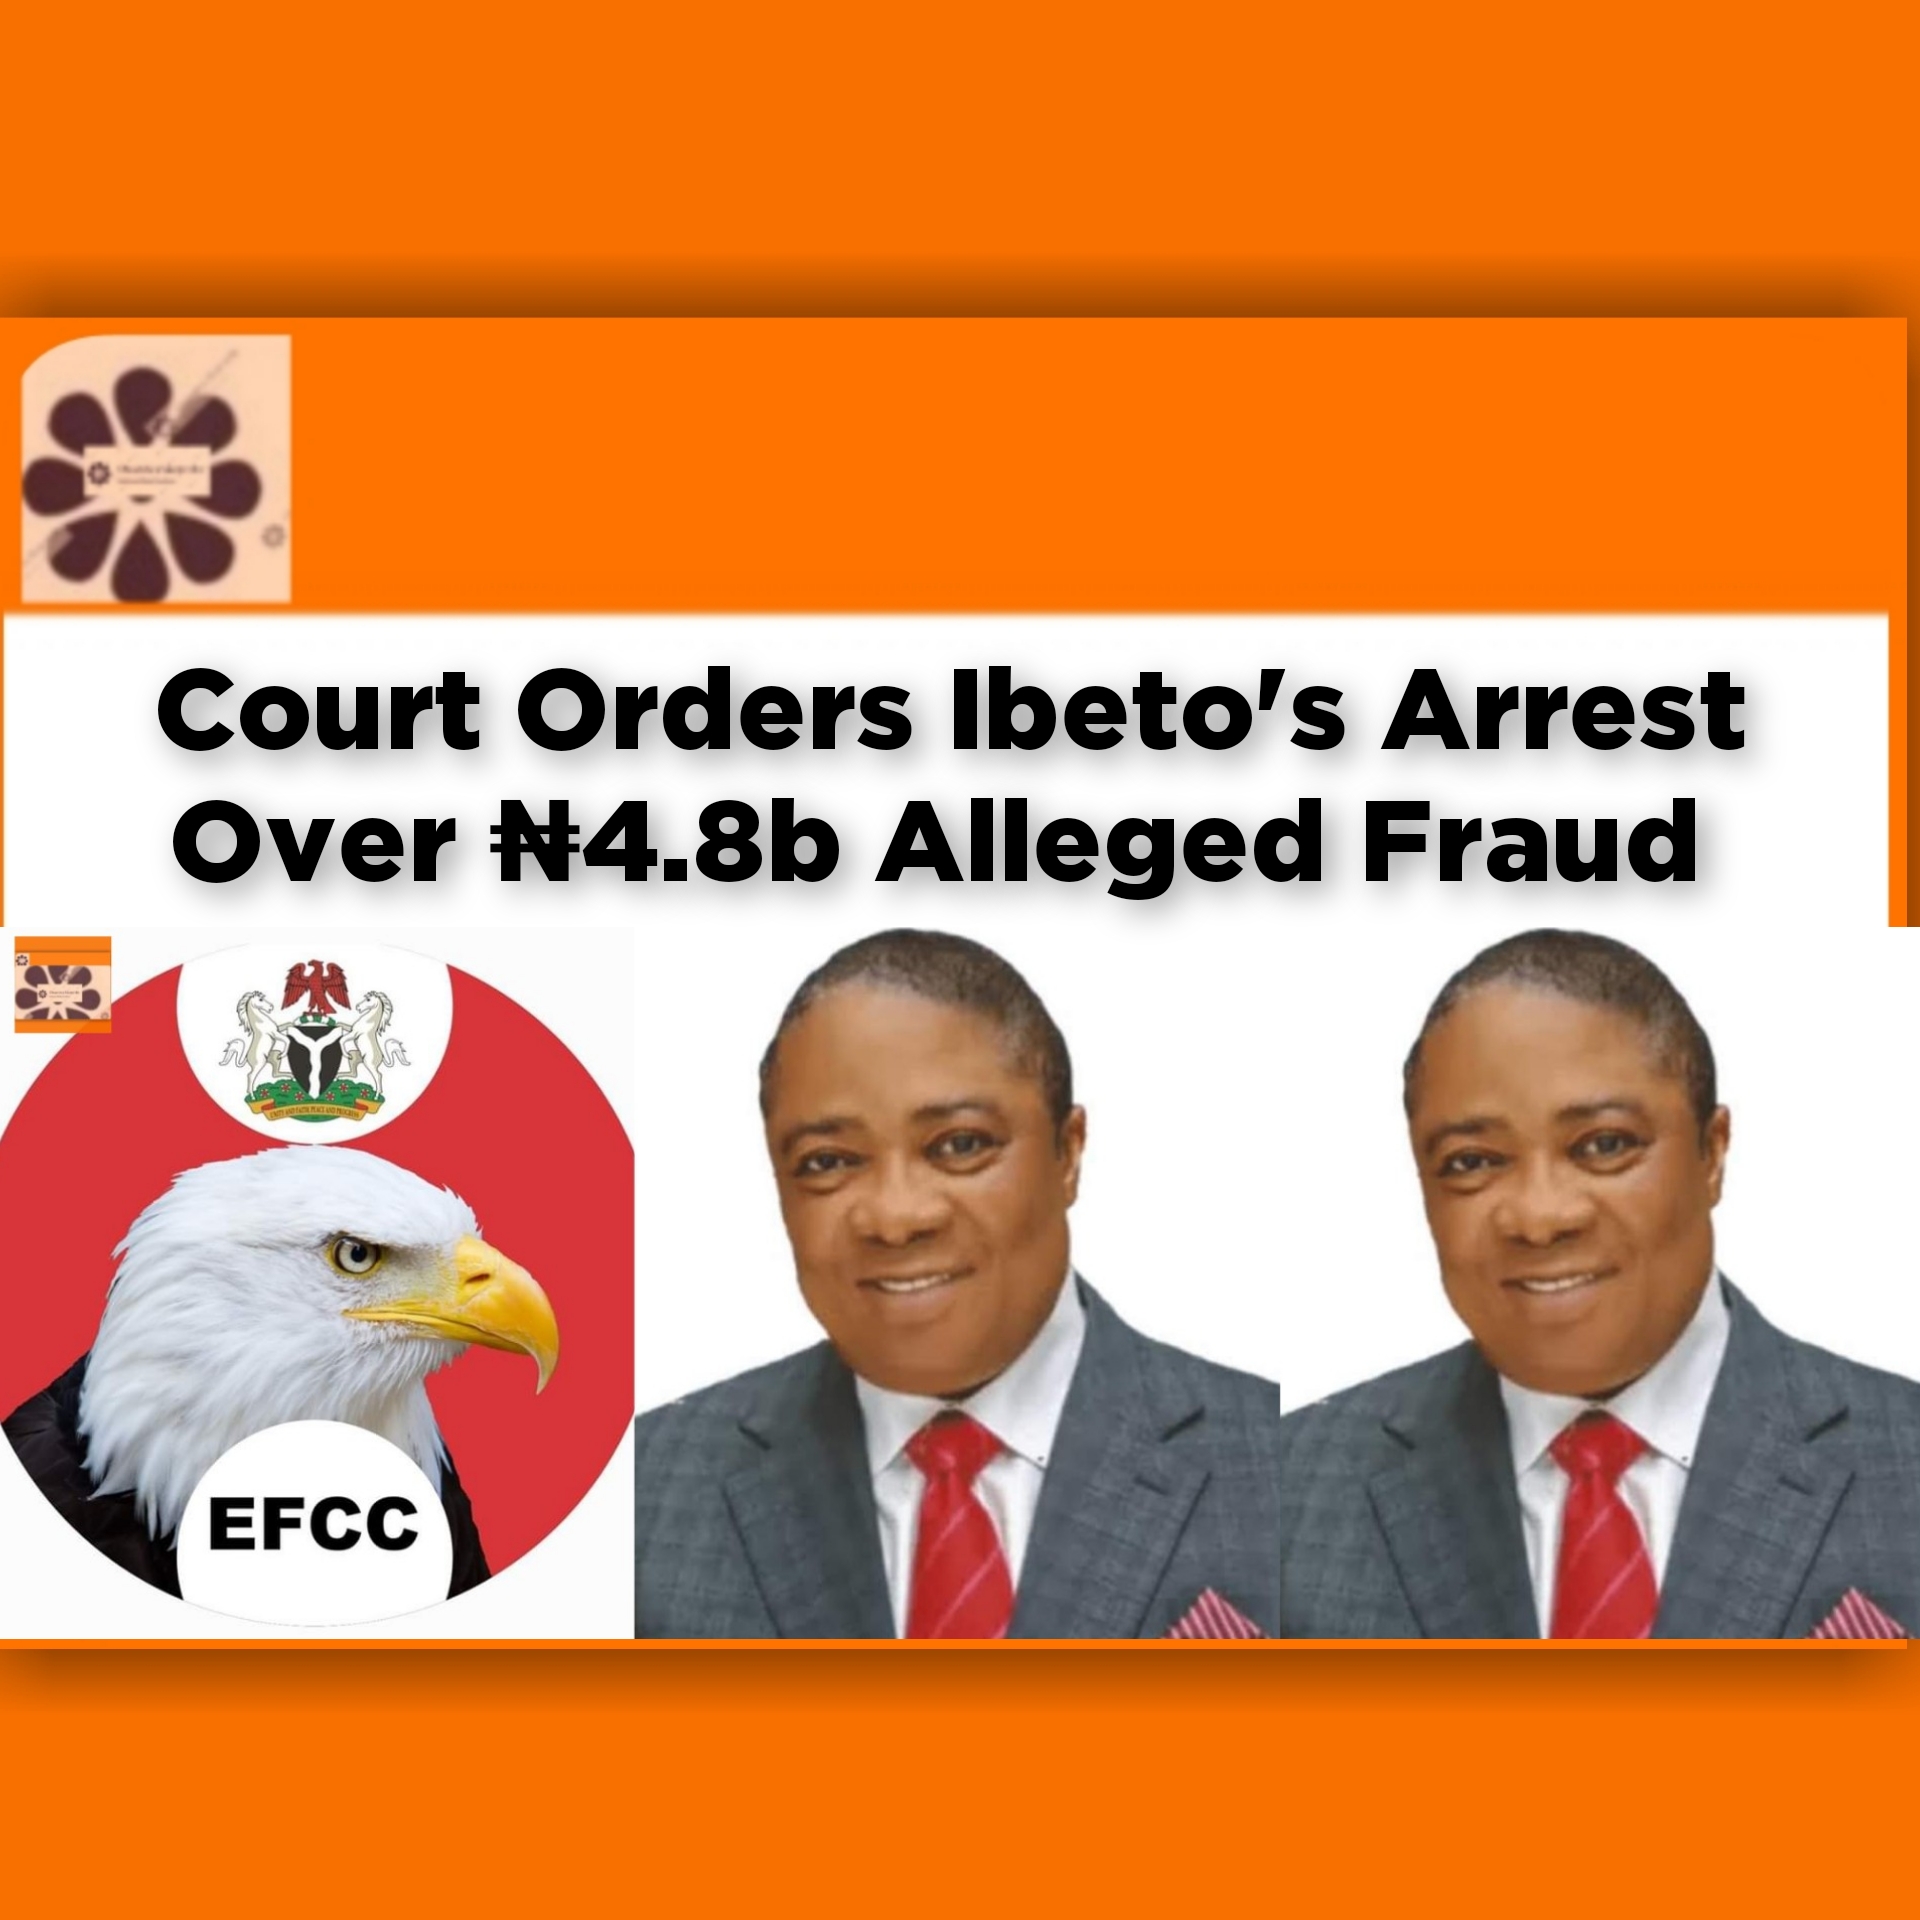 Court Orders Ibeto's Arrest Over ₦4.8b Alleged Fraud ~ OsazuwaAkonedo #Abuja #Cletus #EFCC #Ibeto #OnlineRomance #Yahoo